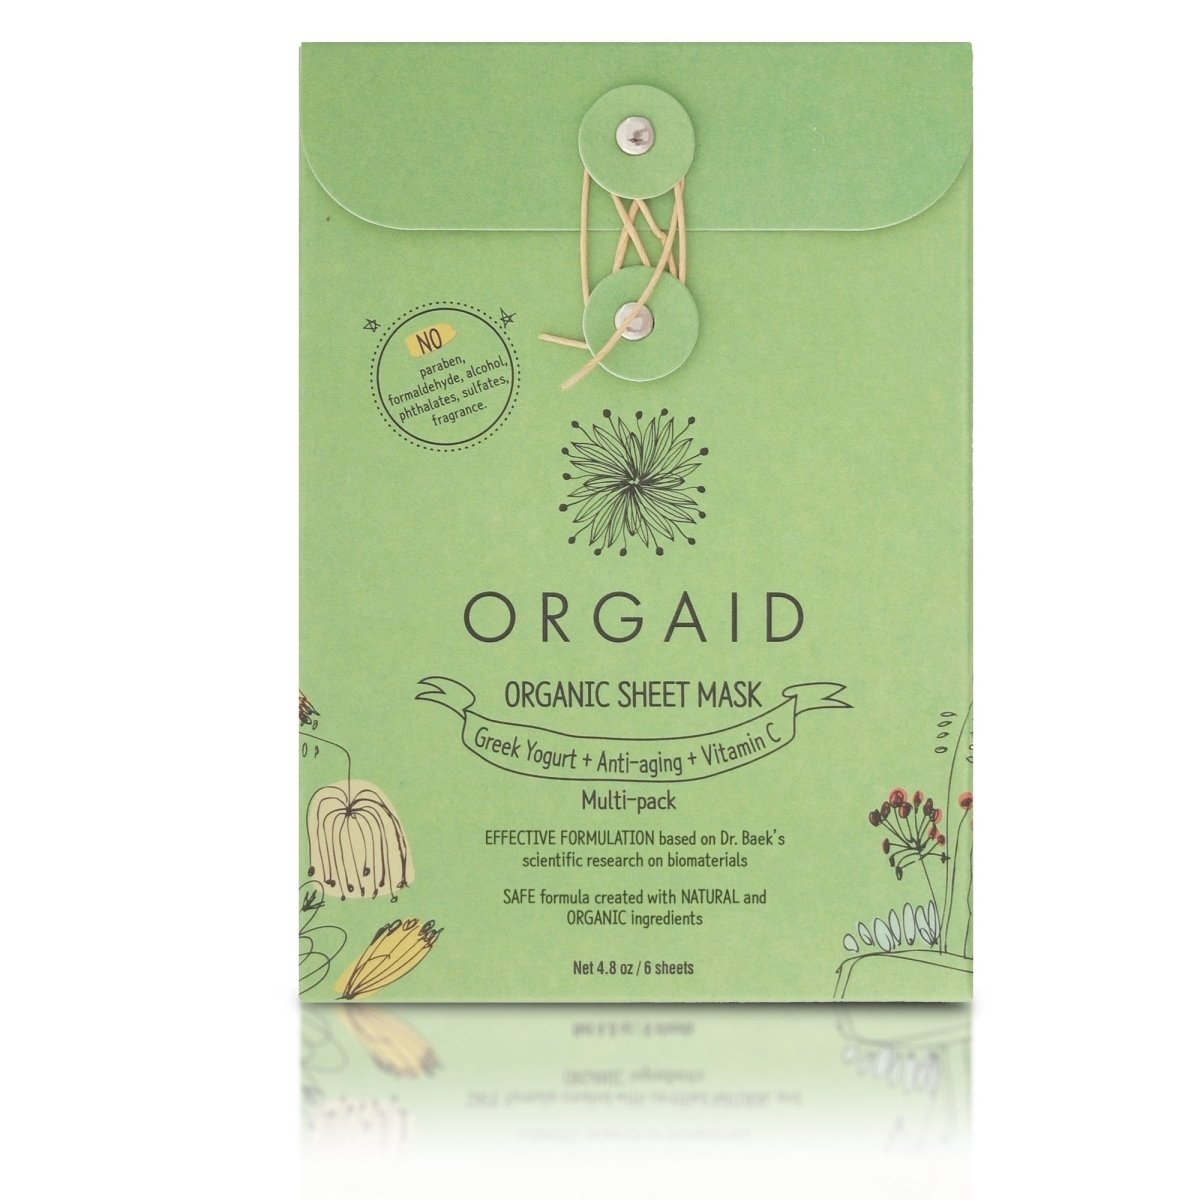 ORGAID Multi-pack Organic Sheet Mask 全方位修護有機面膜 [6pcs] - MINT Organics